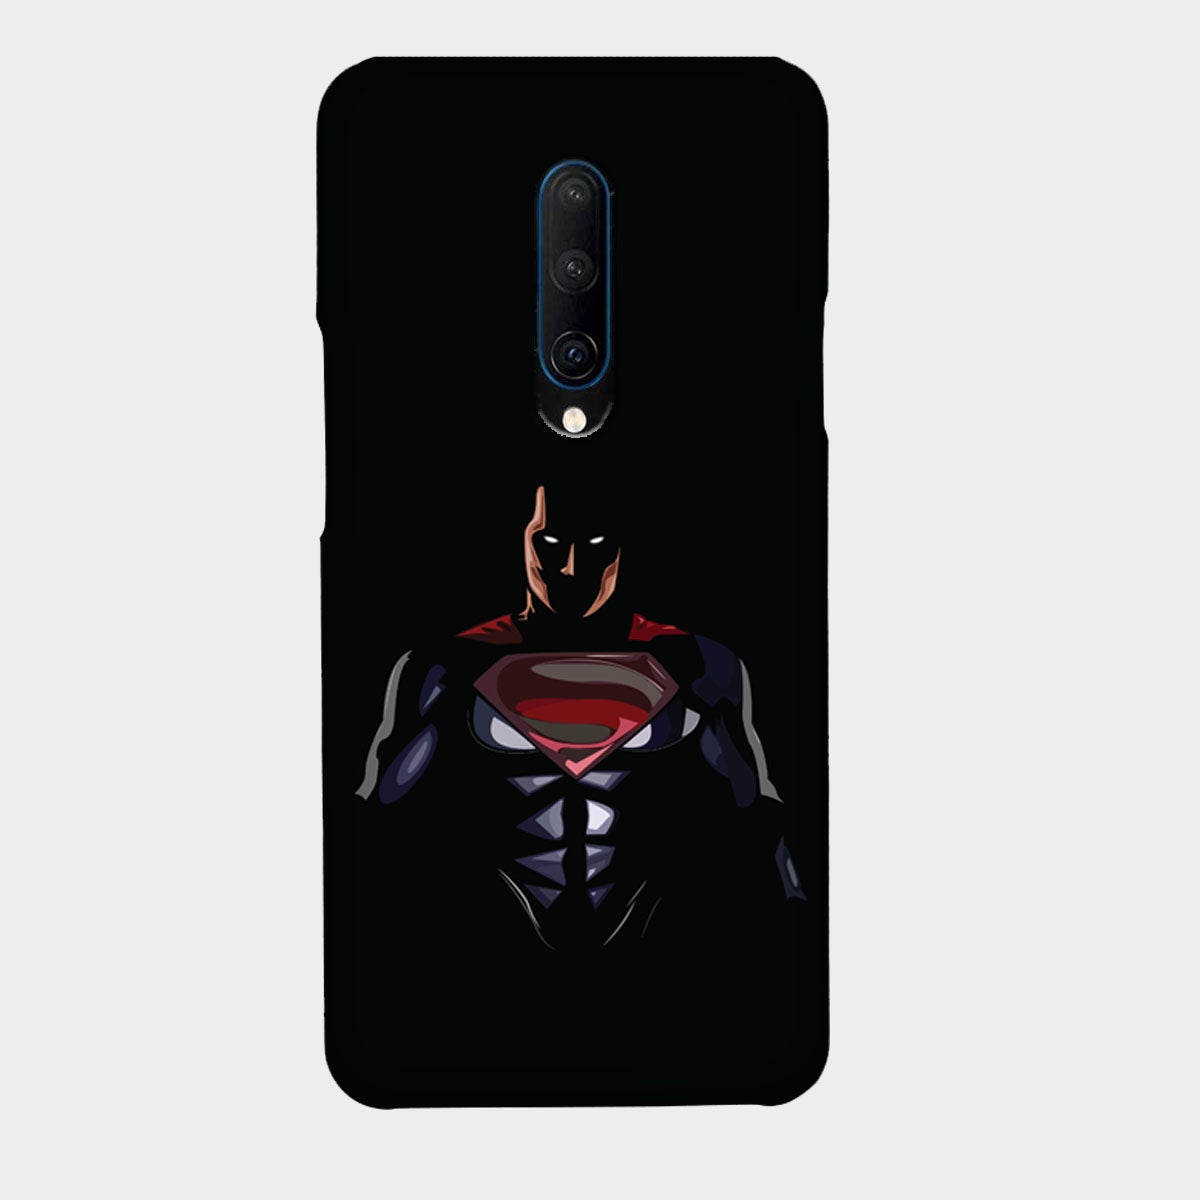 Superman - Man of Steel - Minimalist - Mobile Phone Cover - Hard Case - OnePlus